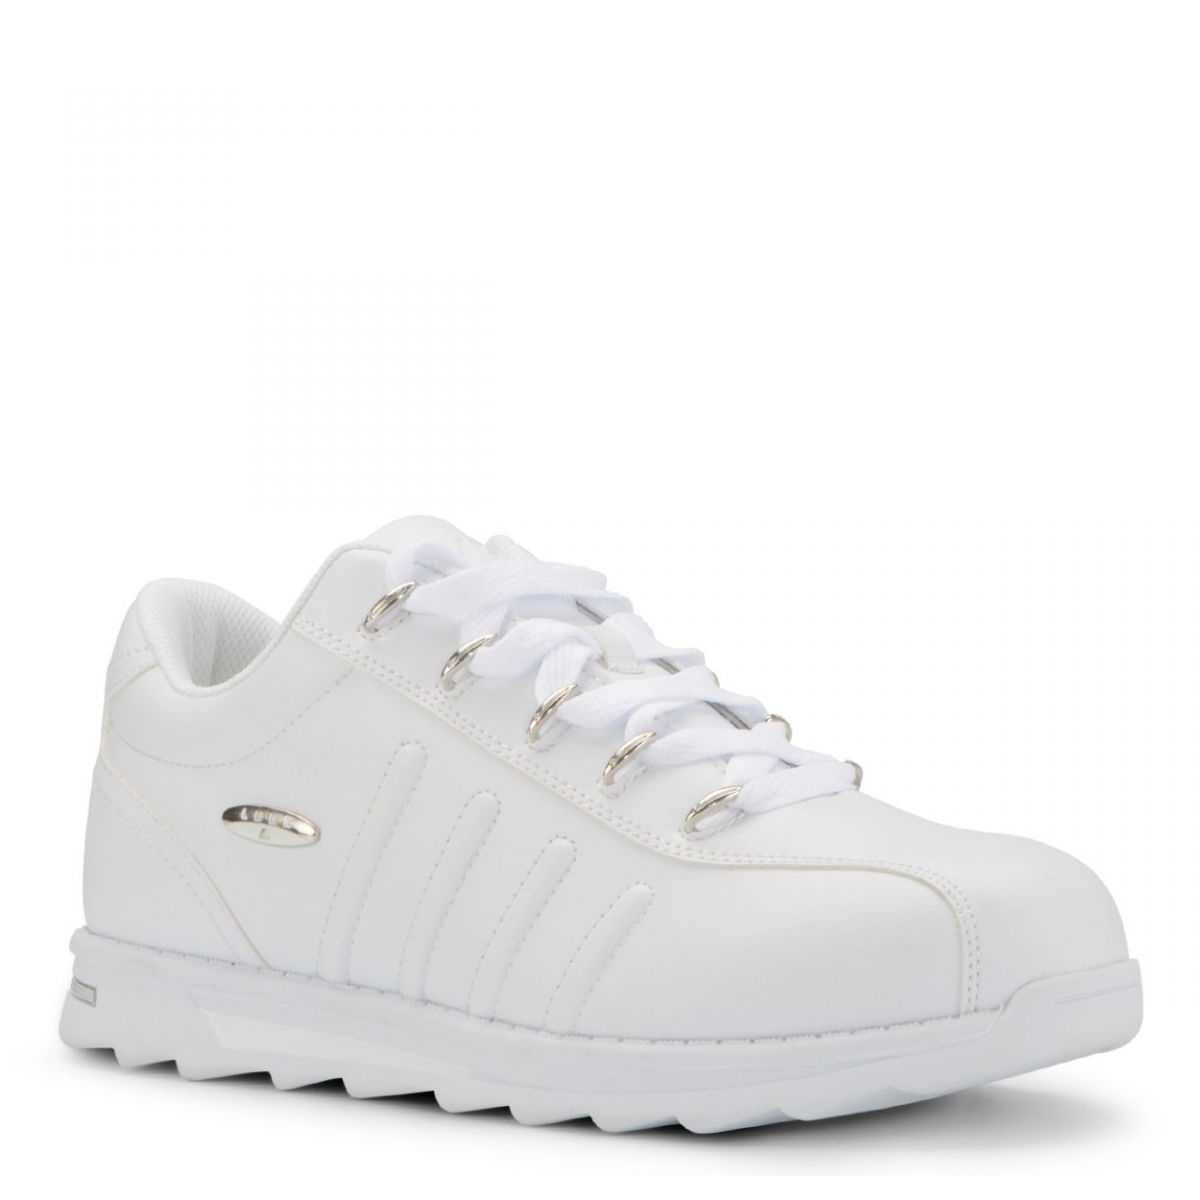 Lugz Men's Changeover II Sneaker White - MCHGIIV-100 WHITE - WHITE, 9